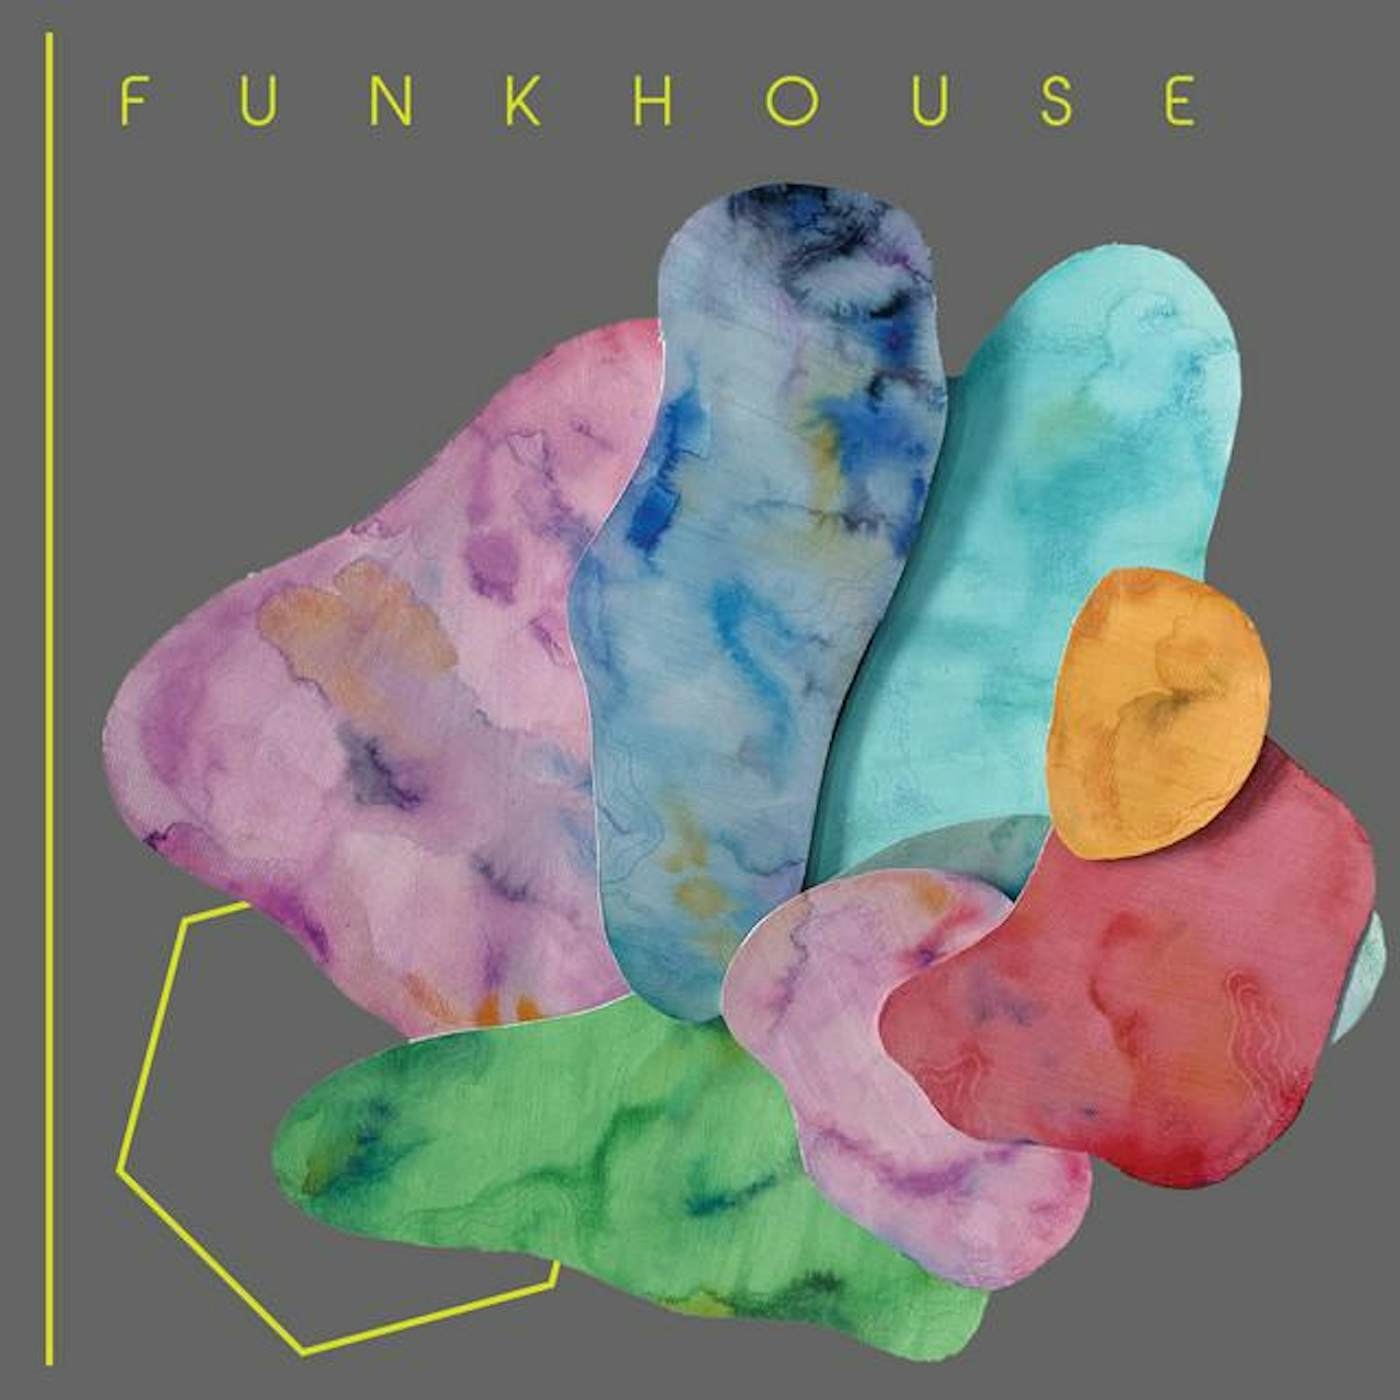 Funkhouse